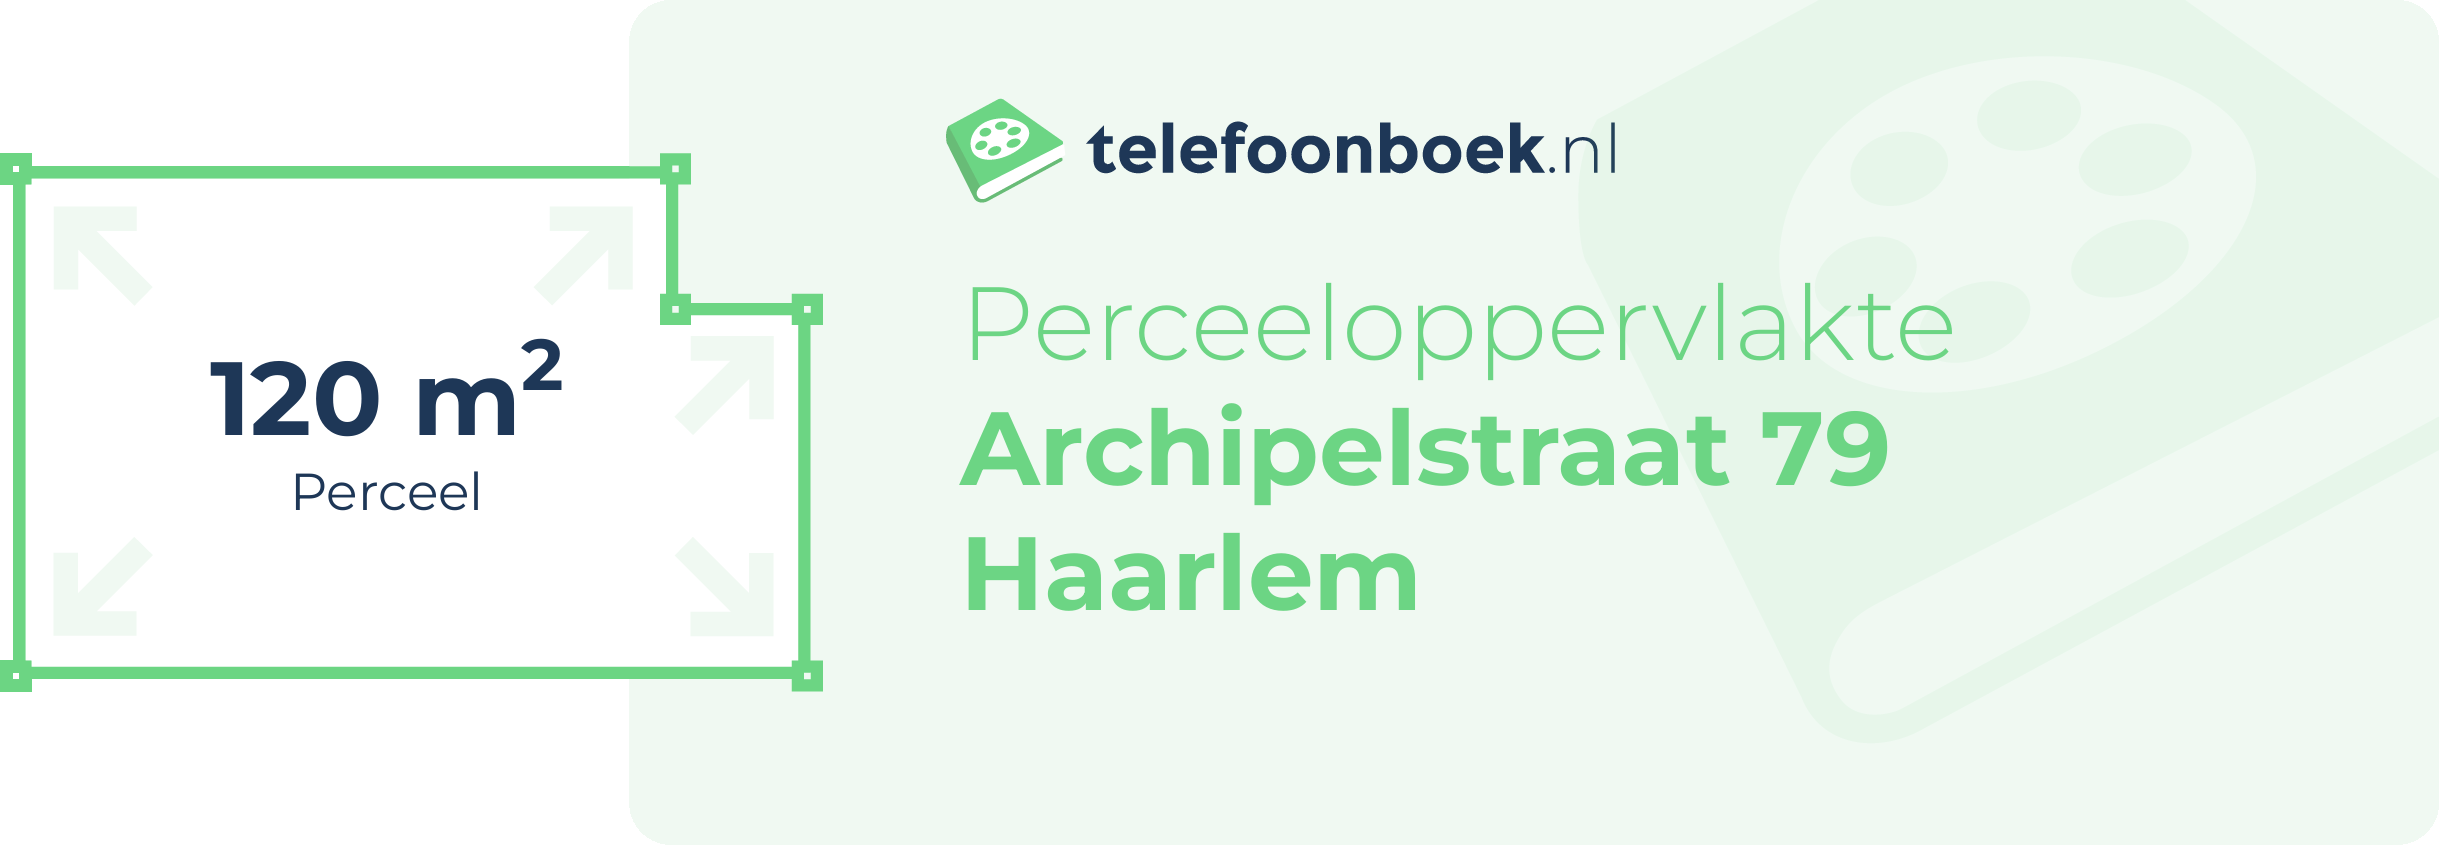 Perceeloppervlakte Archipelstraat 79 Haarlem